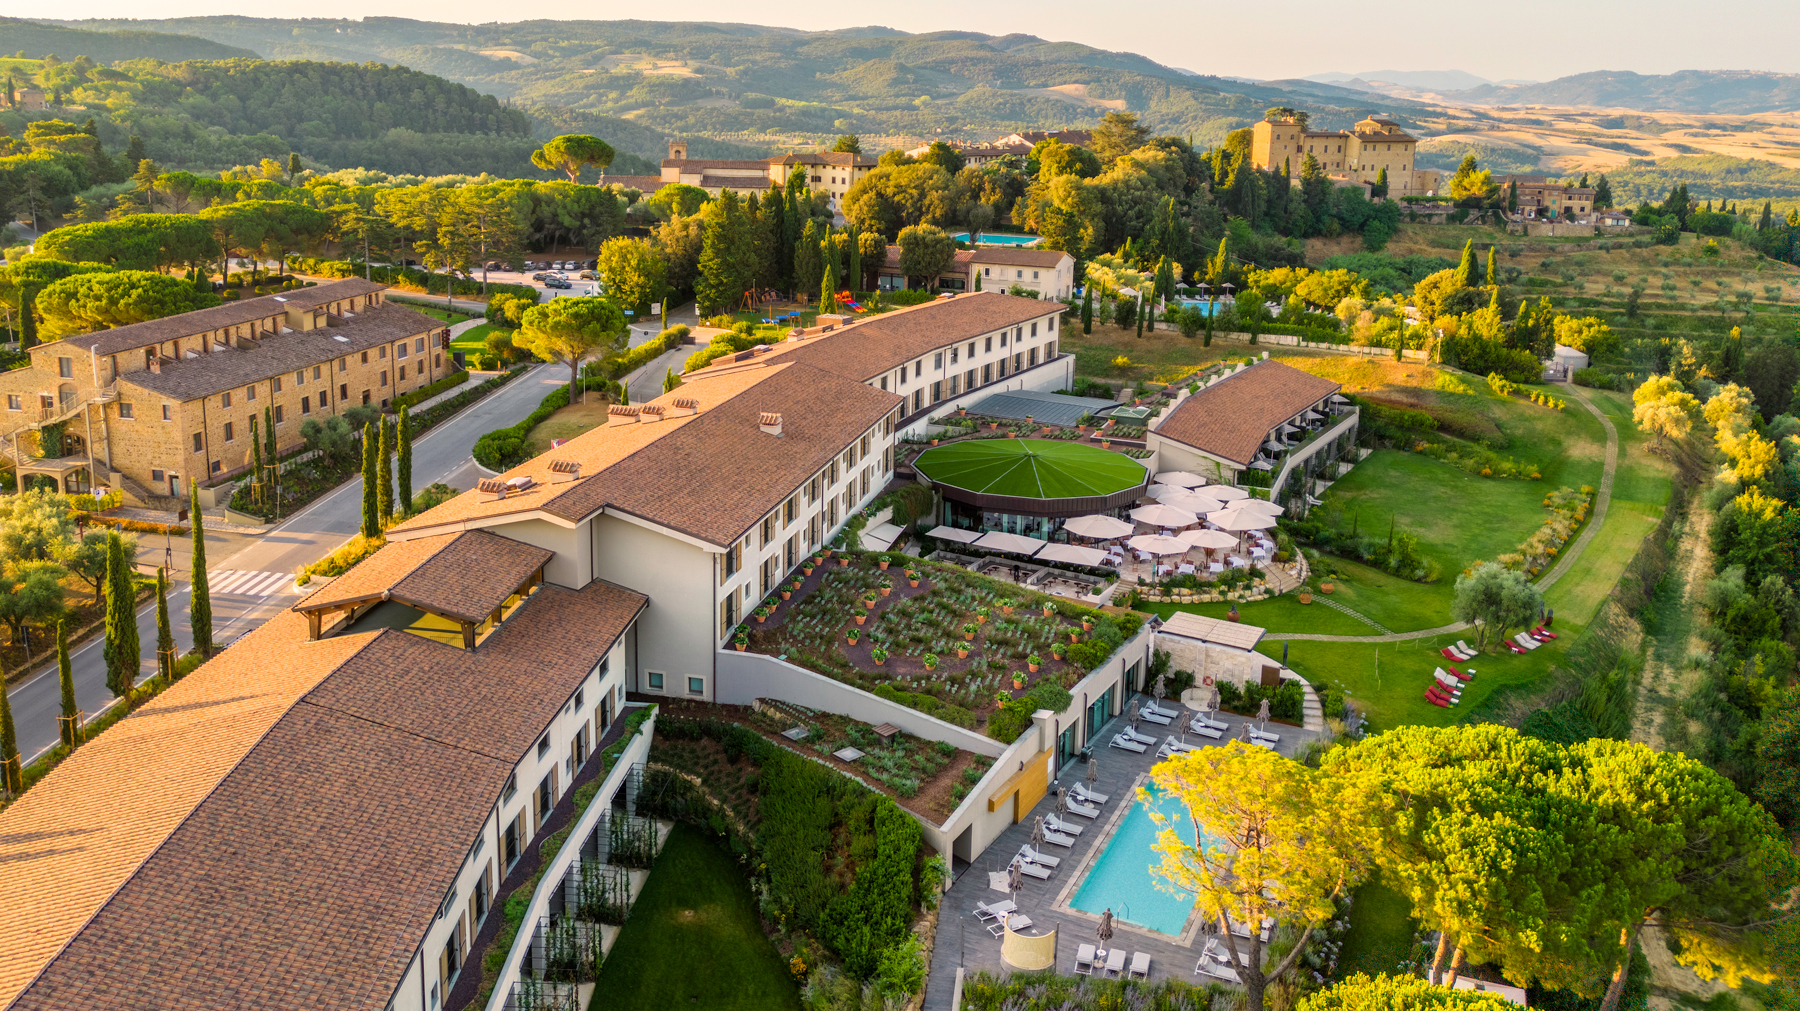 Golftips-Toscana Resort Castelfalfi (2)